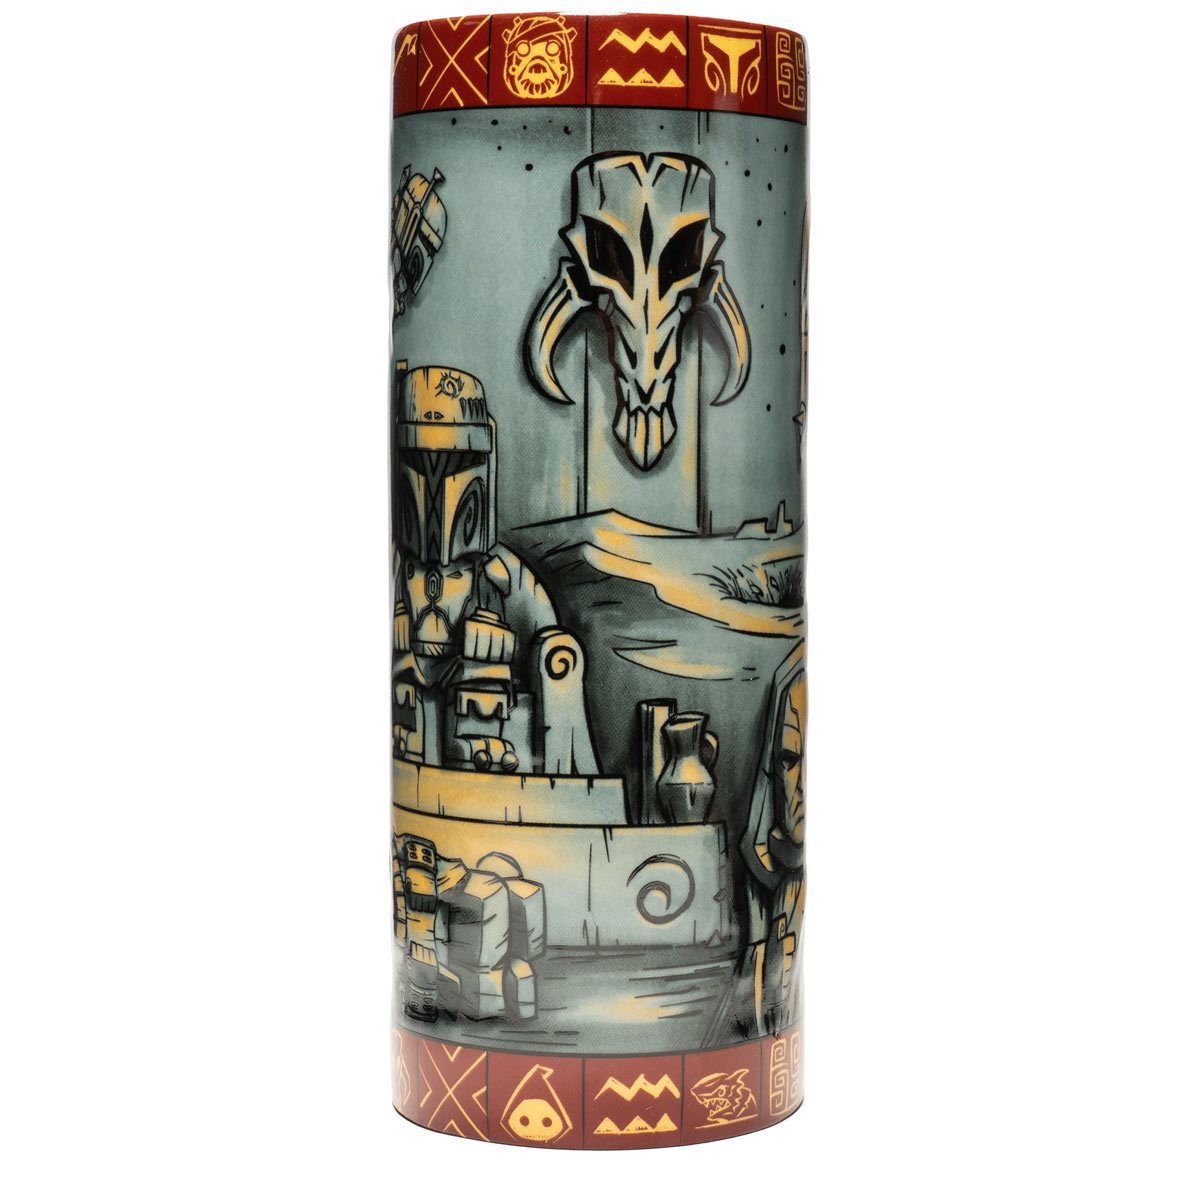 Star Wars Boba Fett 12 oz. Ceramic Mug - Entertainment Earth